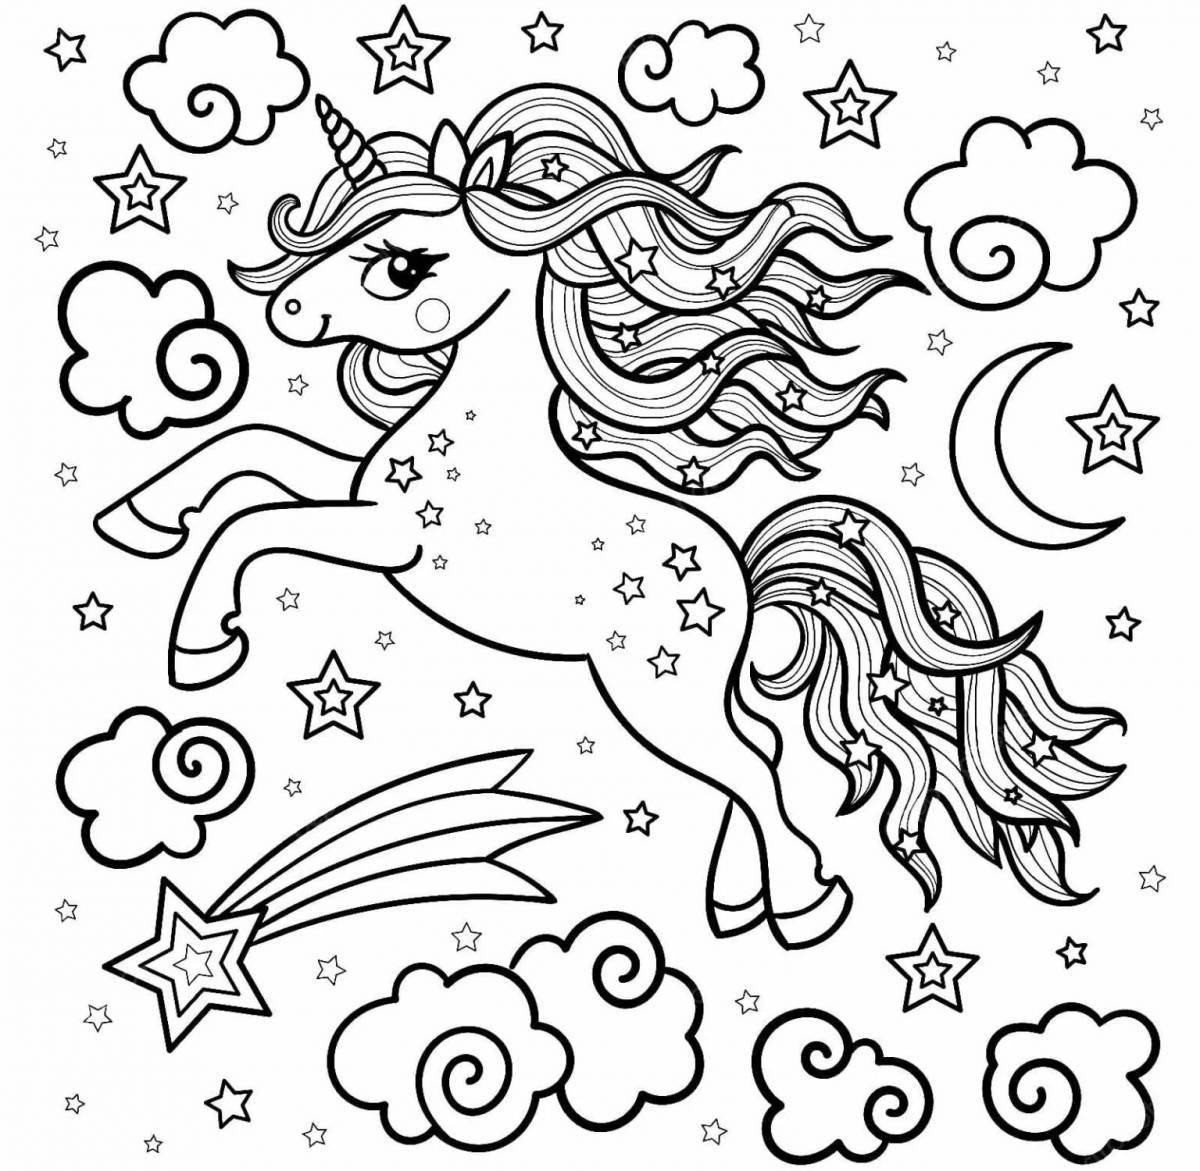 Glitter Christmas unicorn coloring book